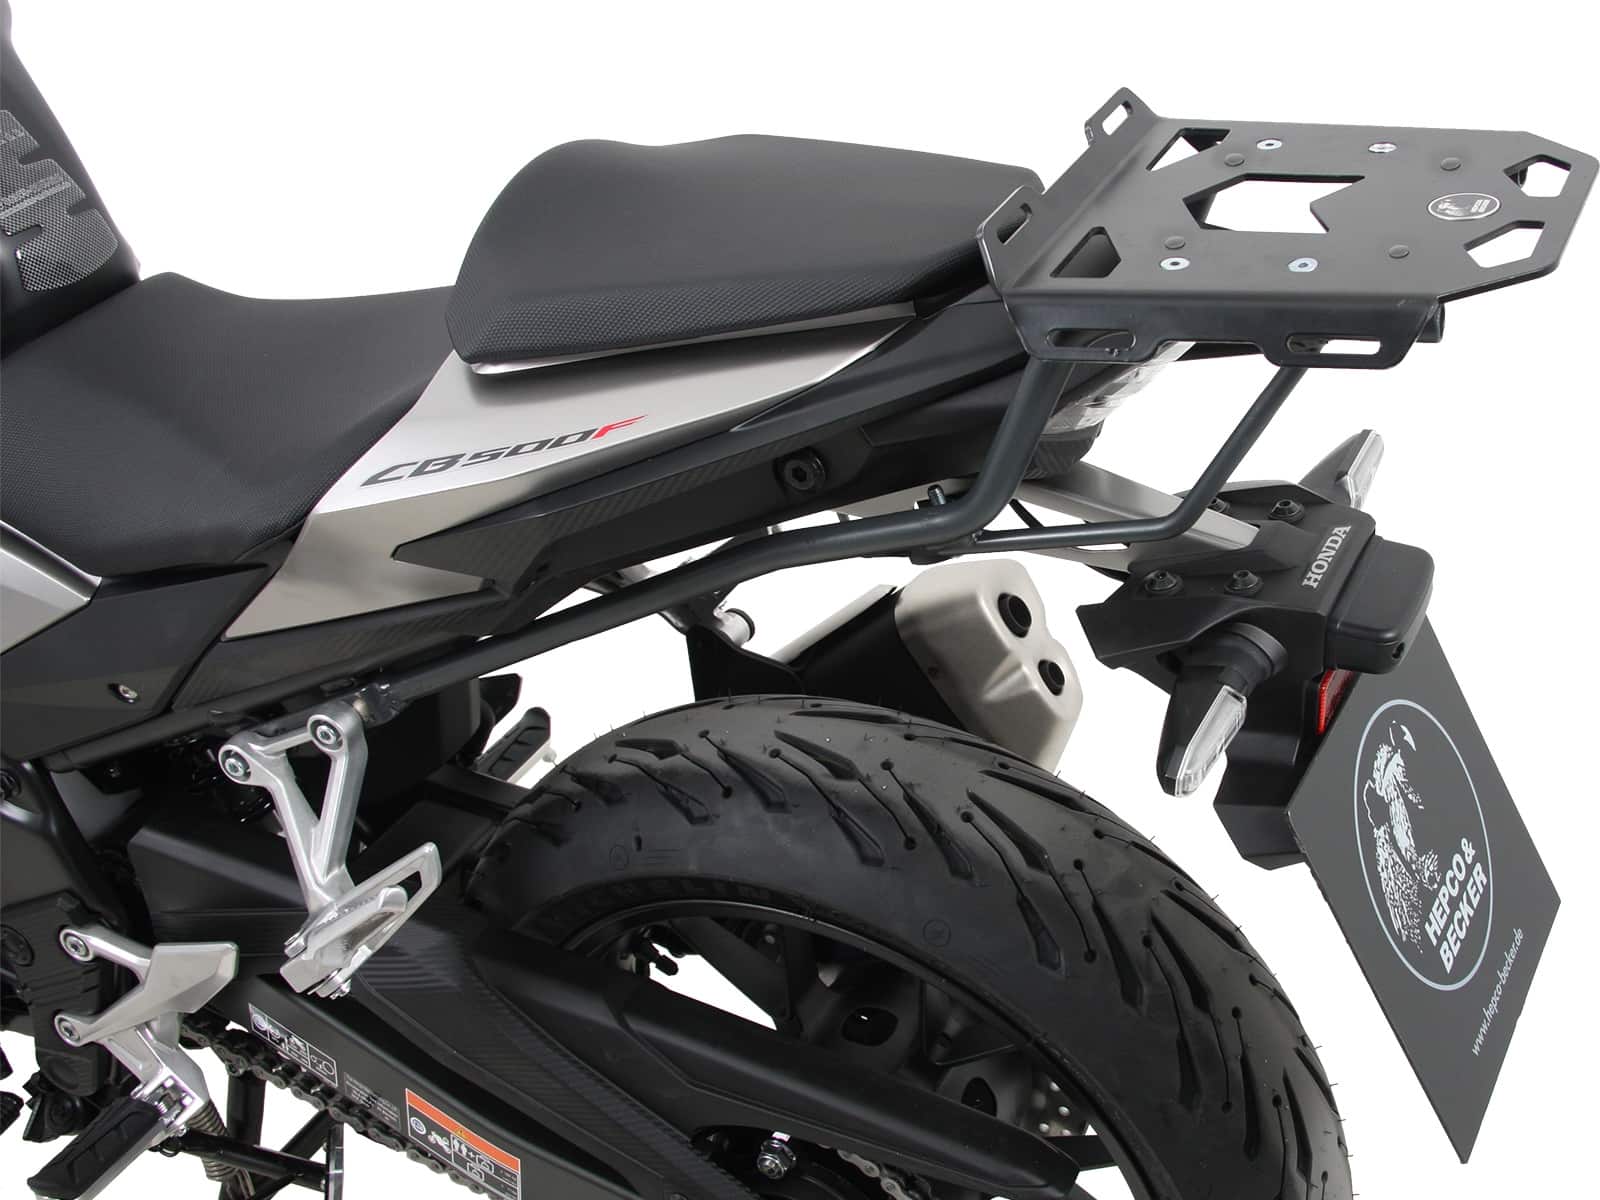 Minirack soft luggage rear rack for Honda CB 500 F (2019-)